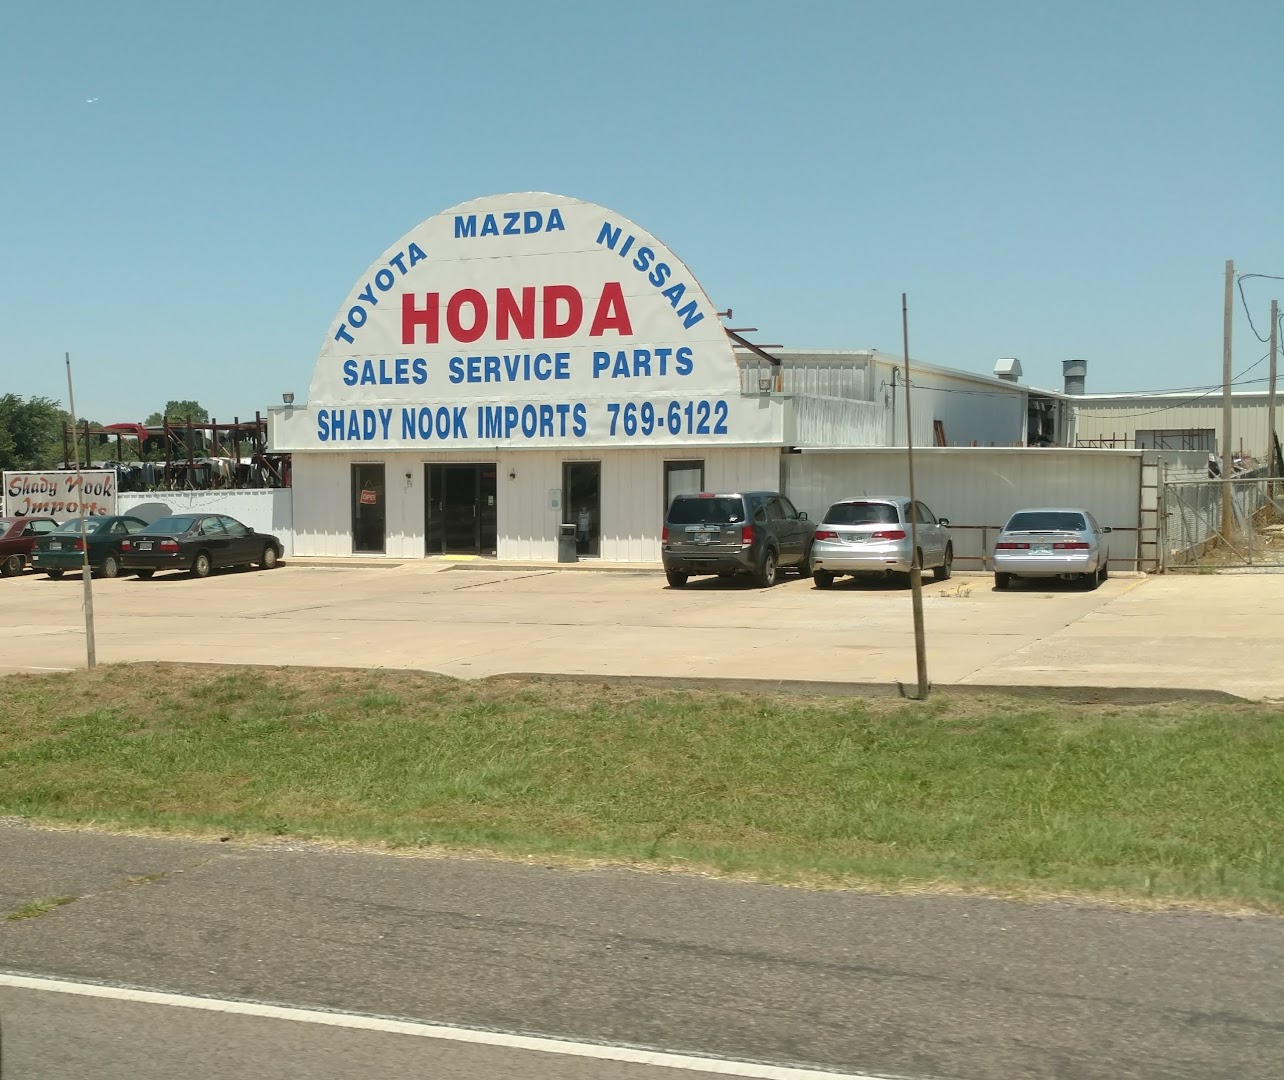 Auto parts store In Oklahoma City OK 